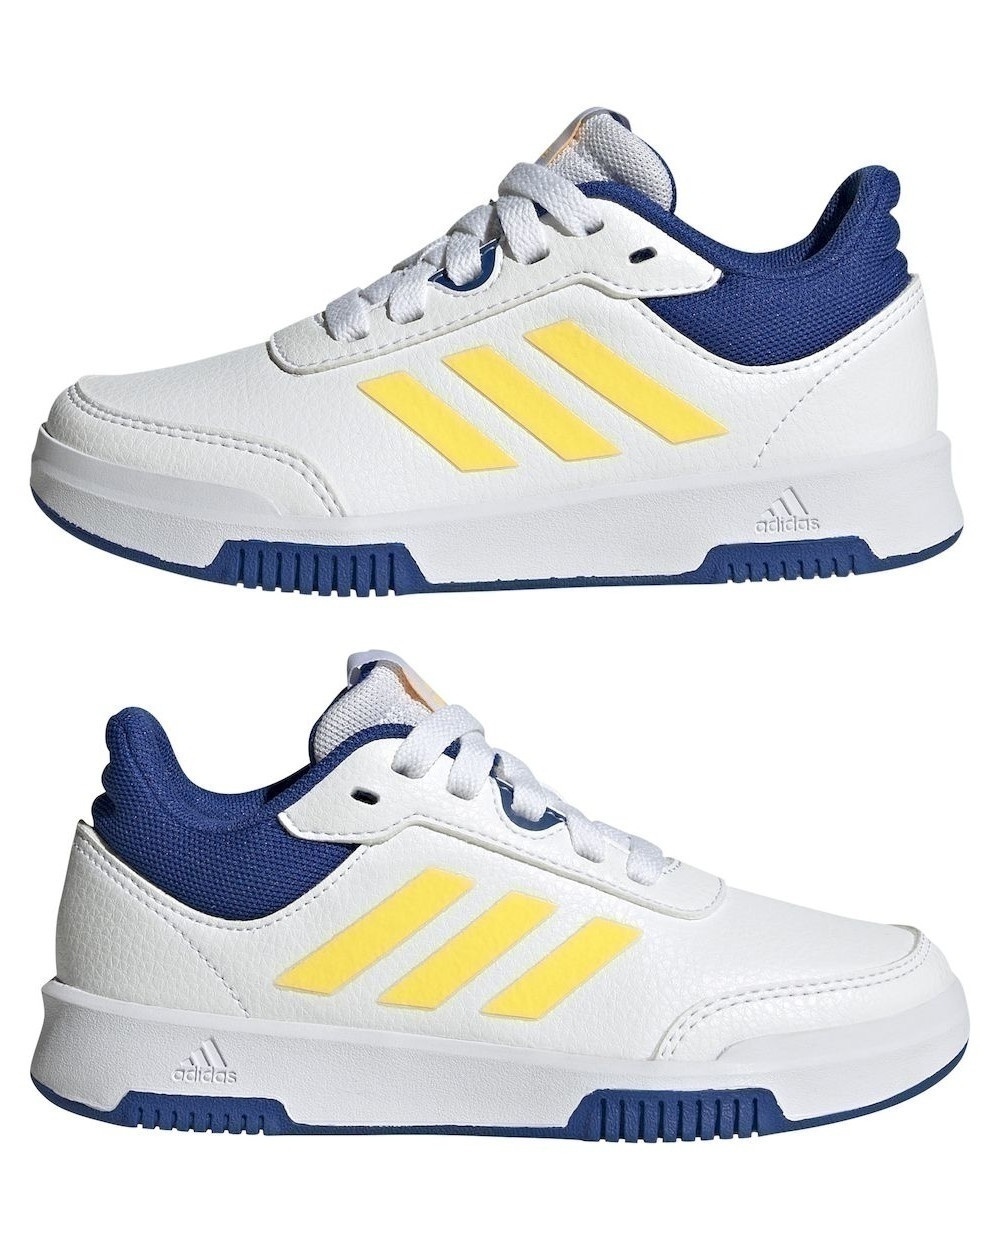  Scarpe Sneakers Bambini Unisex Adidas Tensaur Sport lace Bianco Blue Giallo